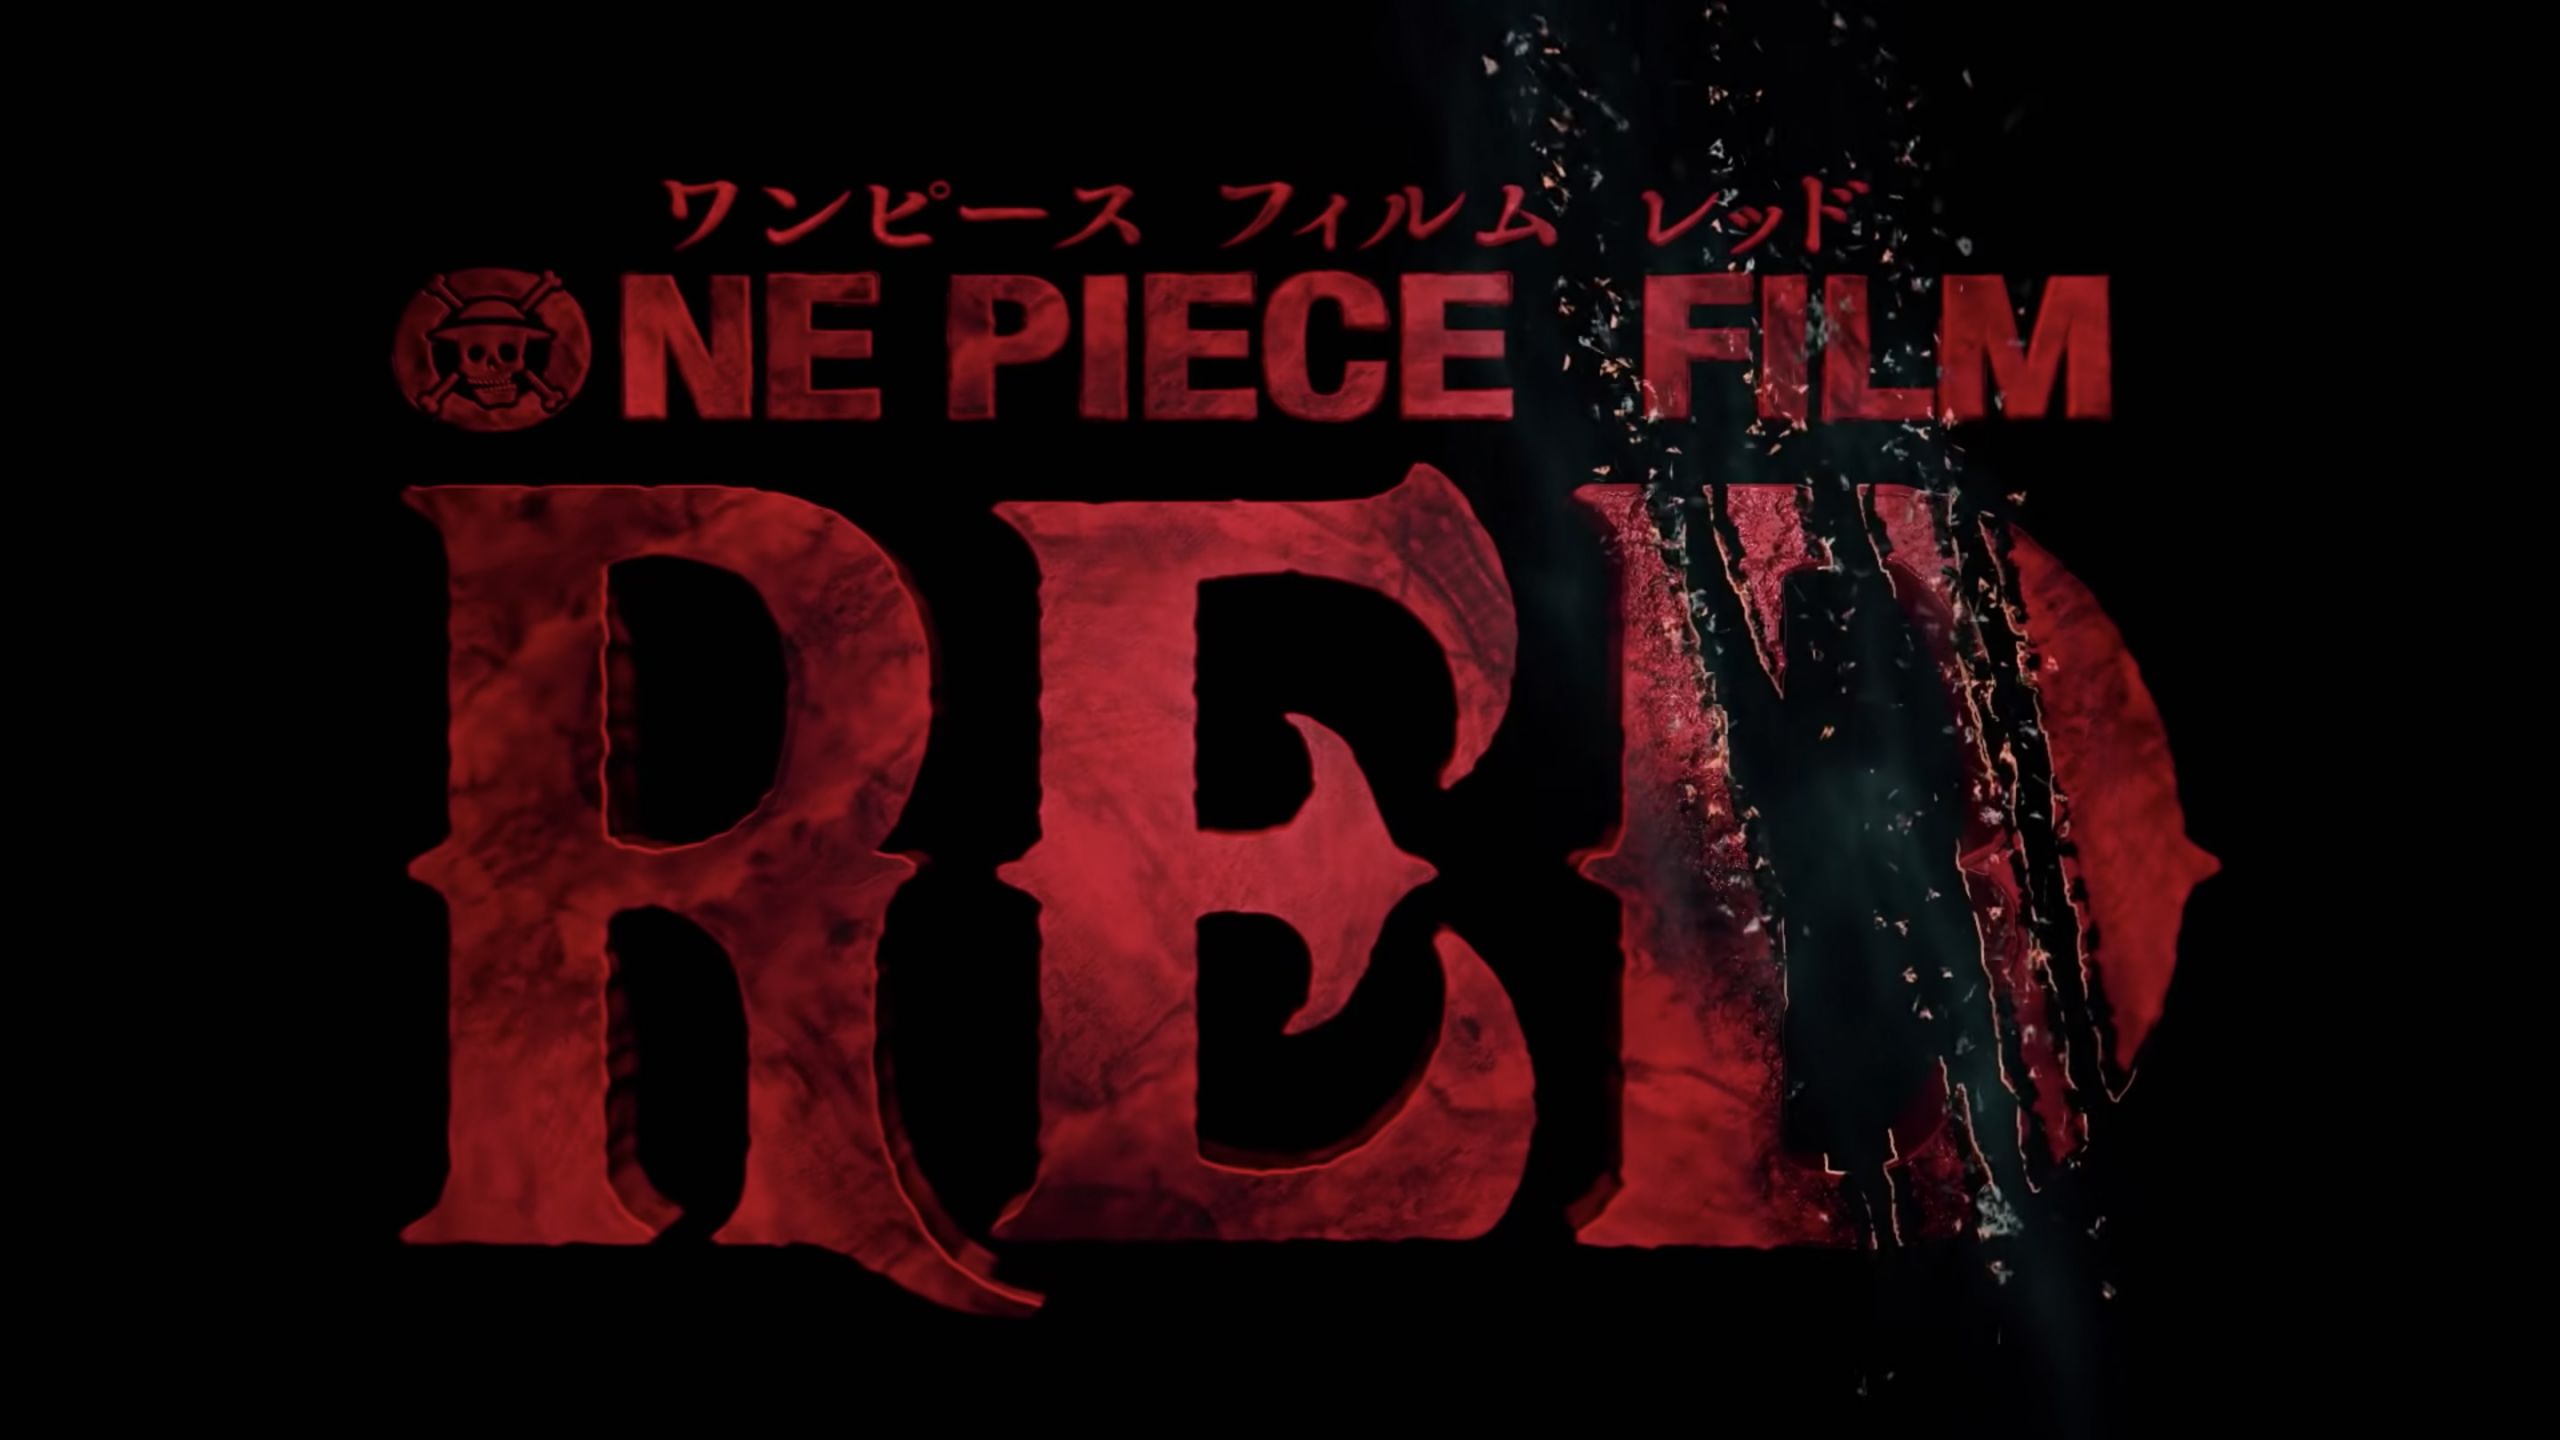 One Piece Film Red Dub Cast includes Brina Palencia, AmaLee